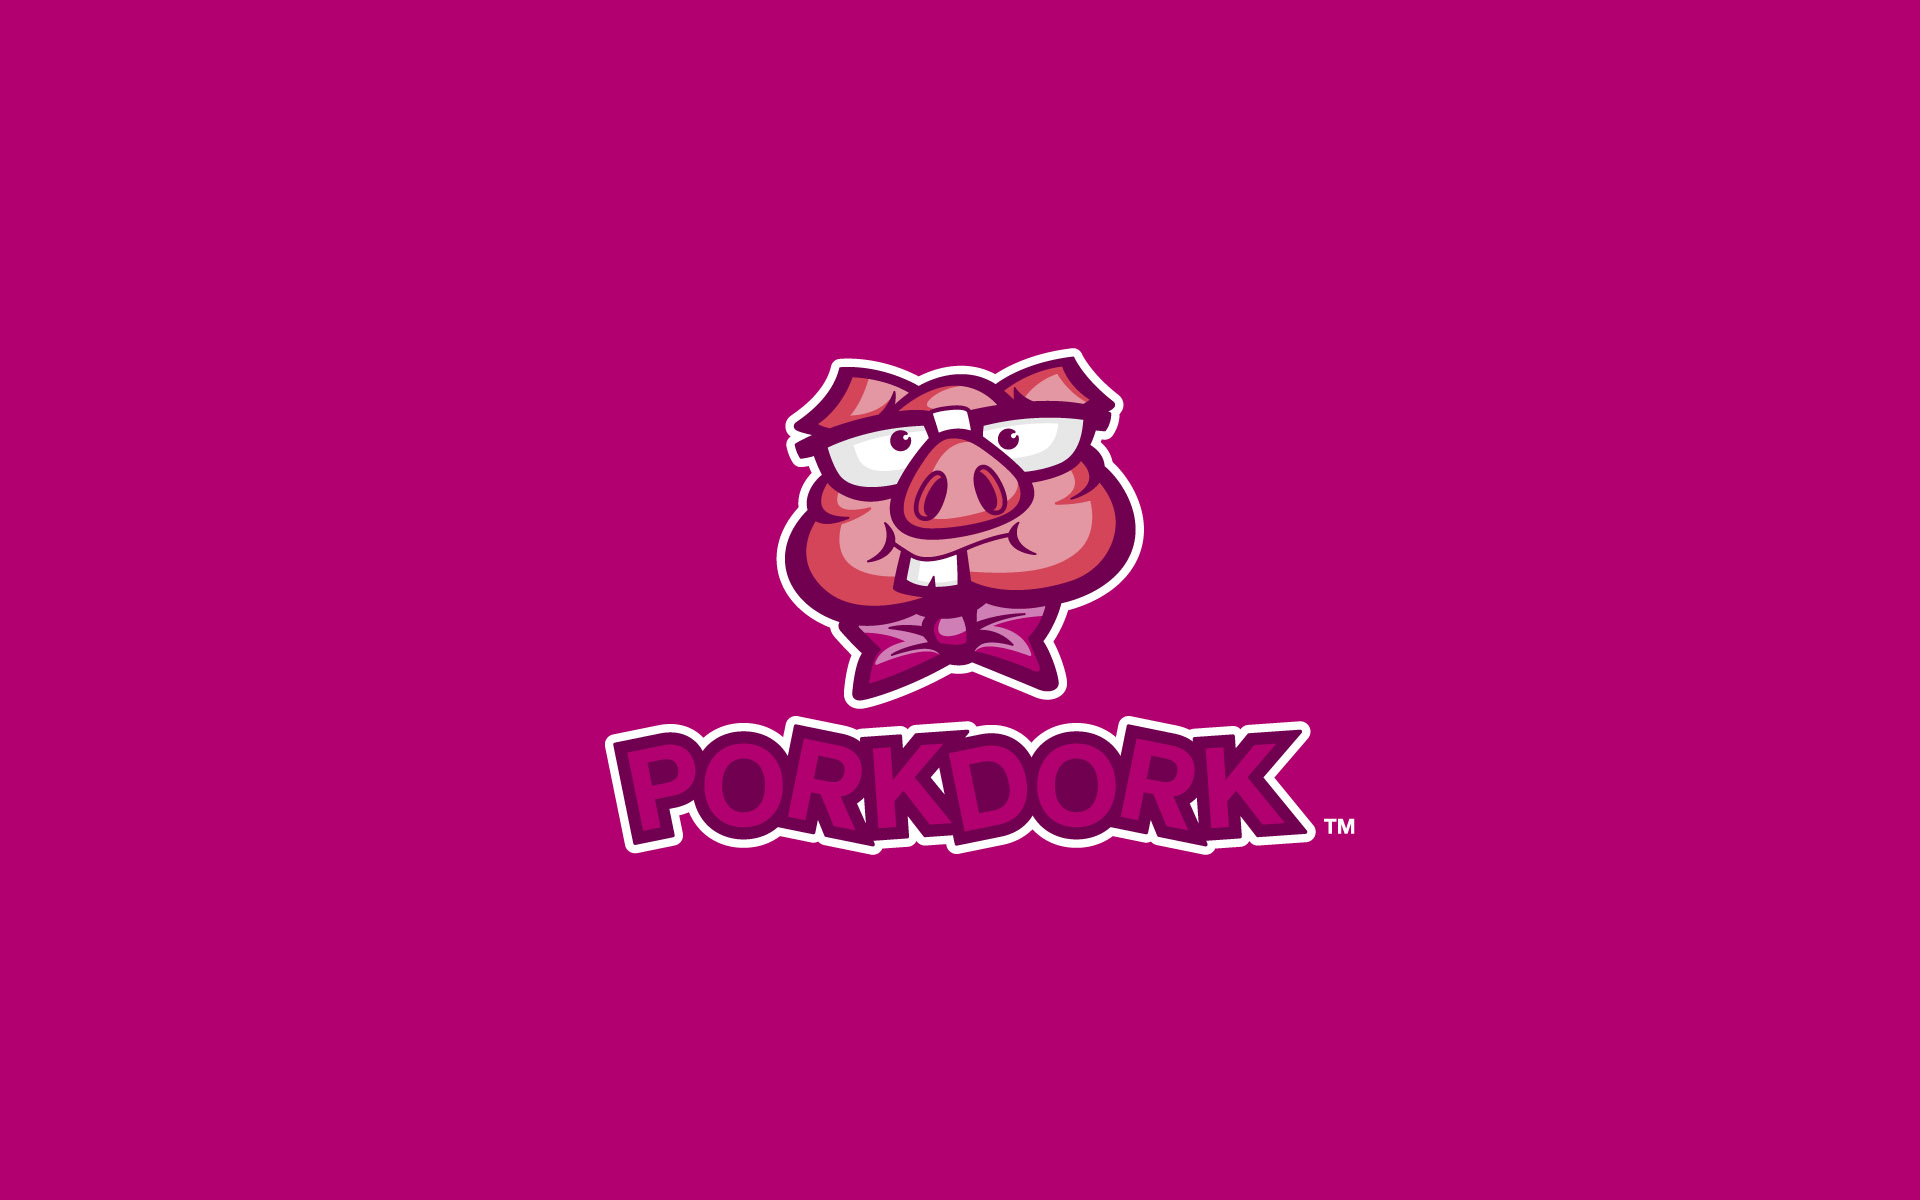 Porkdork Brand Identity